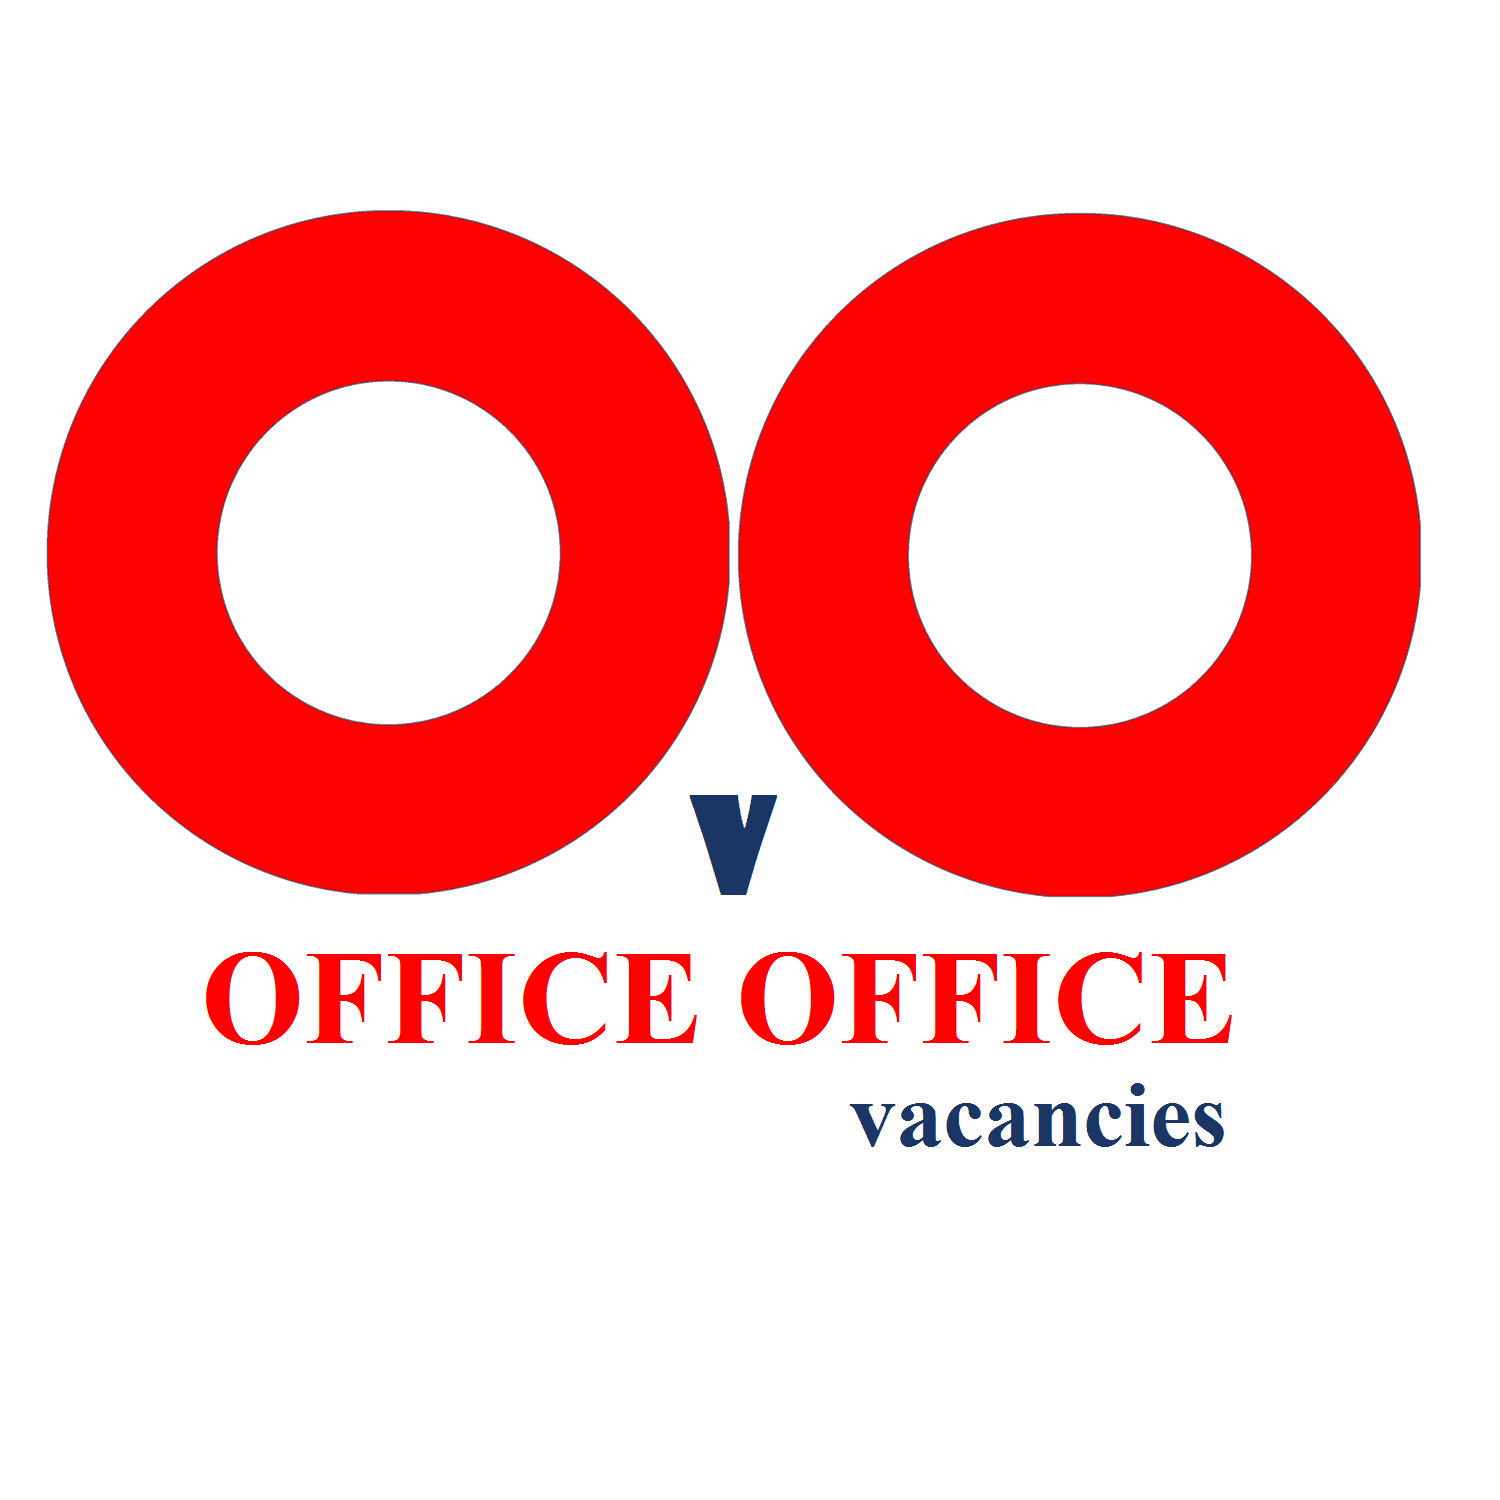 OFFICE OFFICE Vacancies